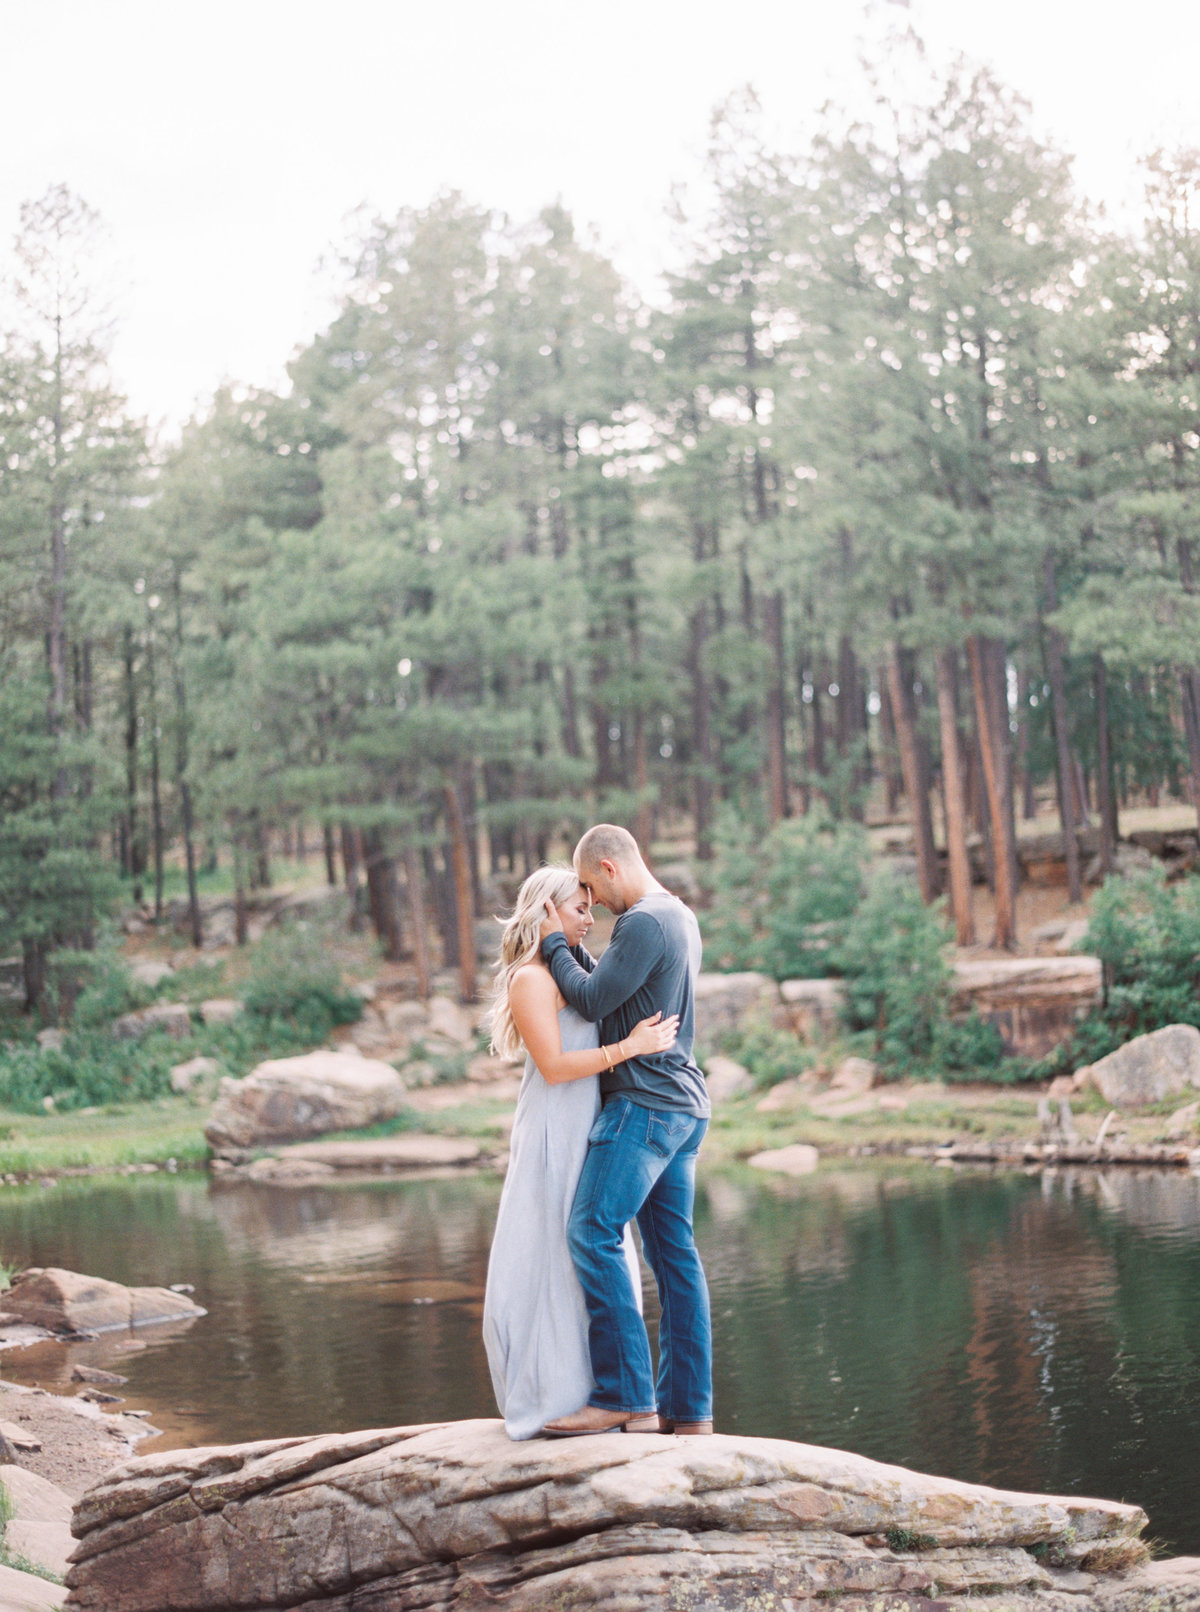 Mimi & Zach | Engagement Session | Woods Canyon Lake, Arizona | Mary Claire Photography | Arizona & Destination Fine Art Wedding Photographer